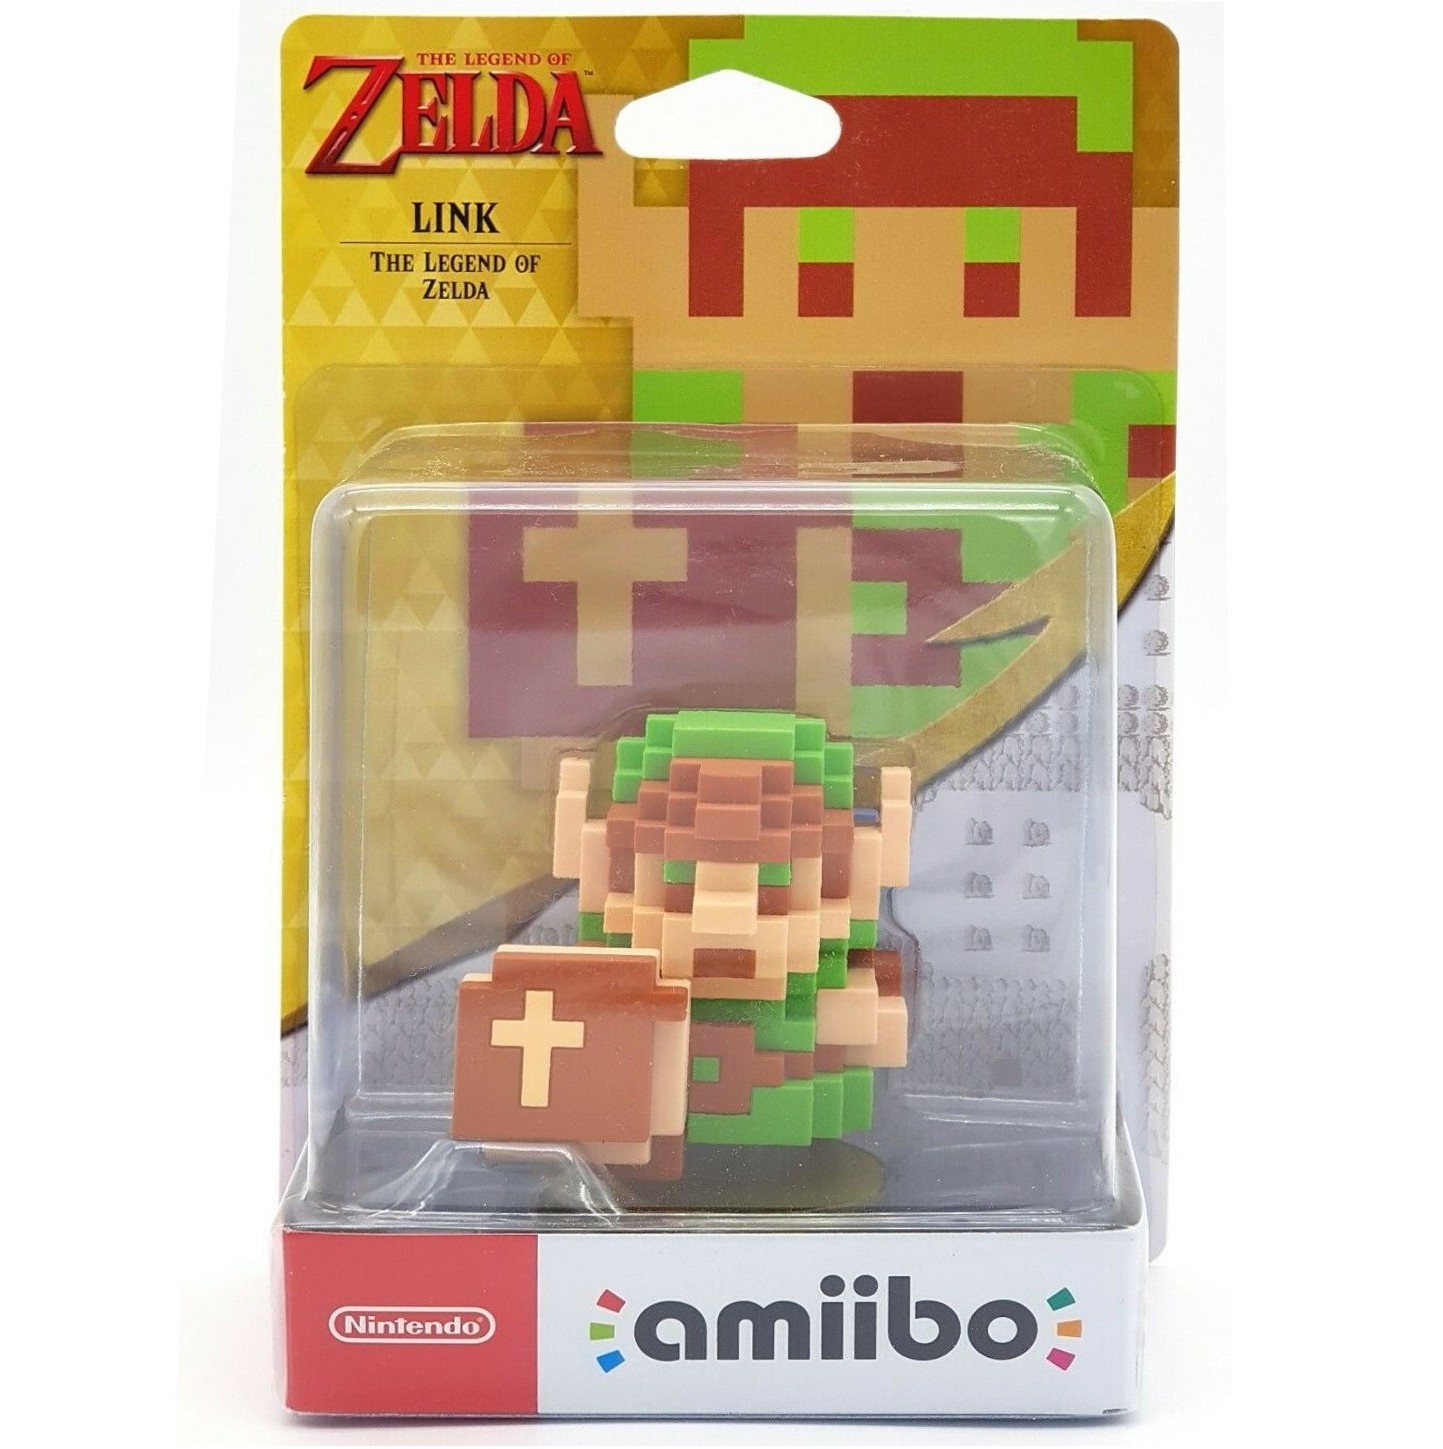 The Legend of Zelda Link 8-Bit Amiibo (reprint), USA/Europe 2019.